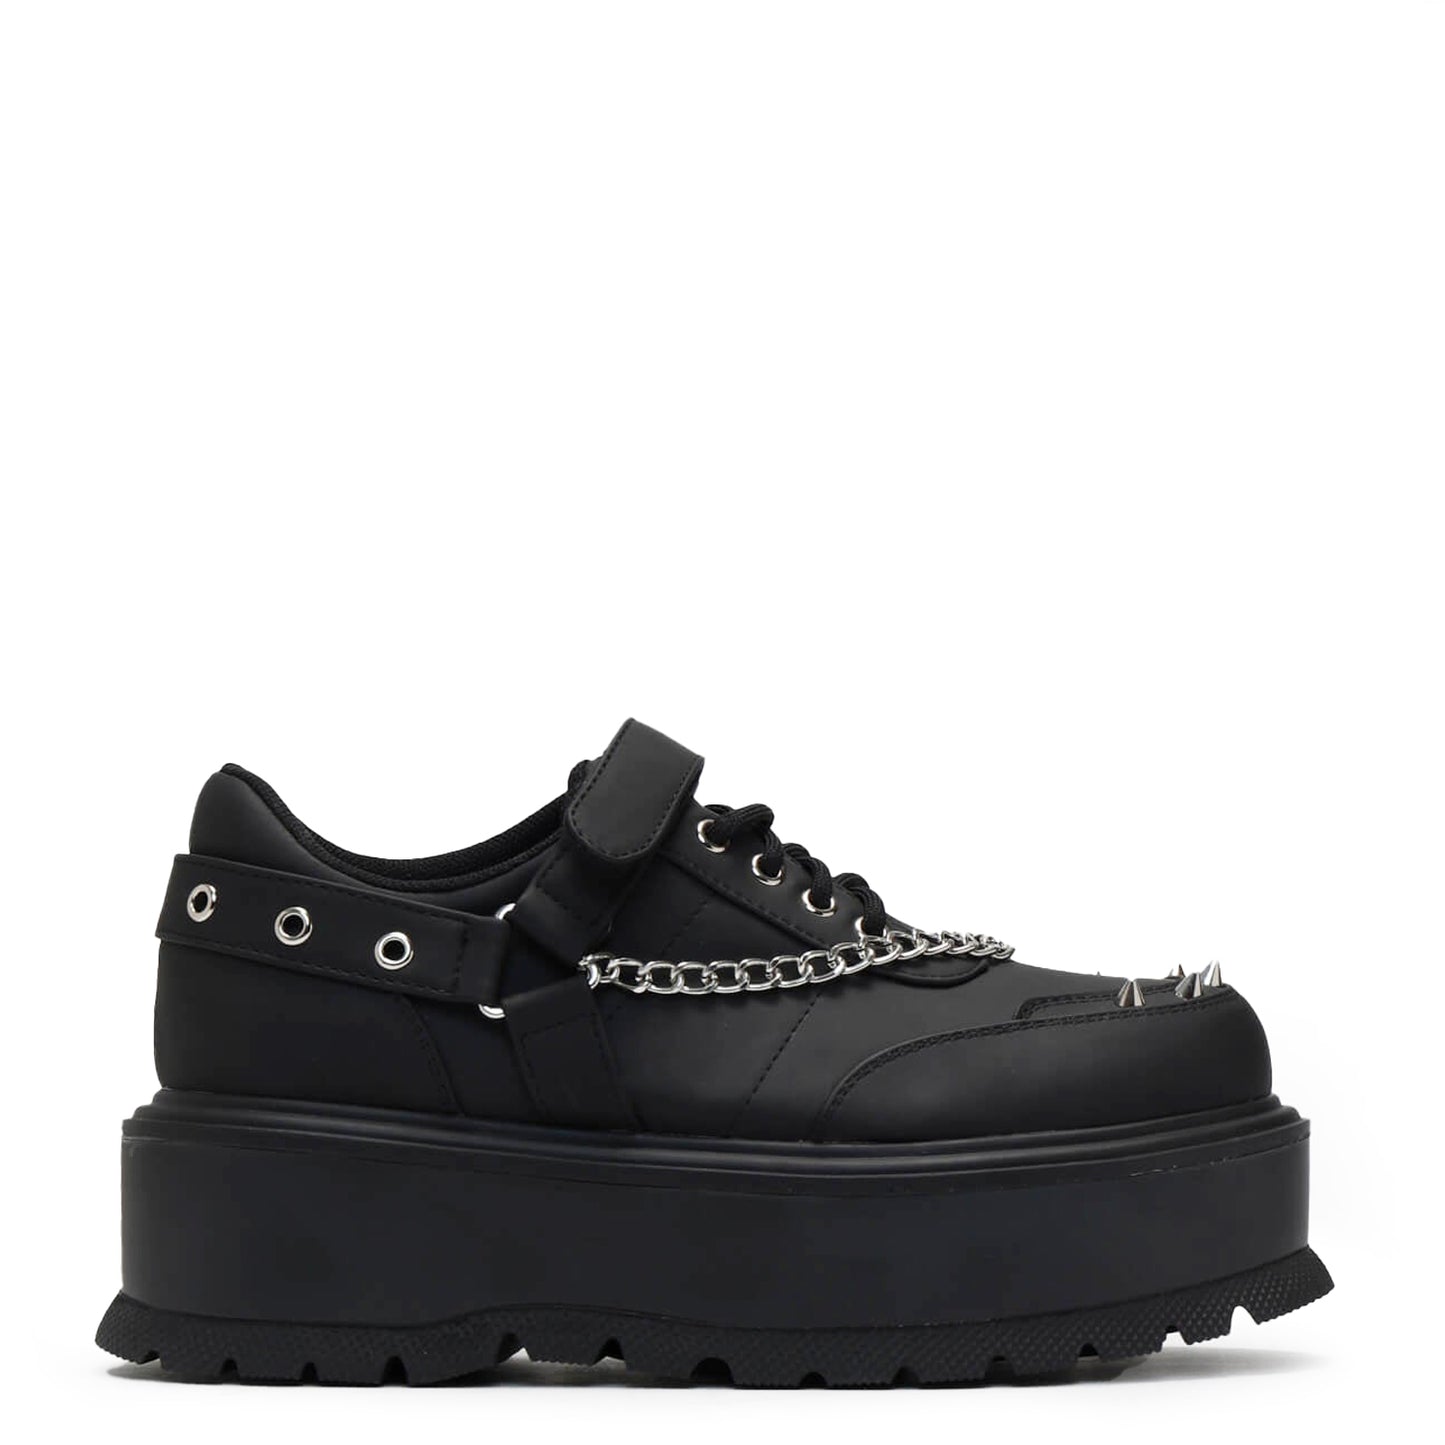 Retrograde Rebel Black Platform Shoes - Shoes - KOI Footwear - Black - Main View